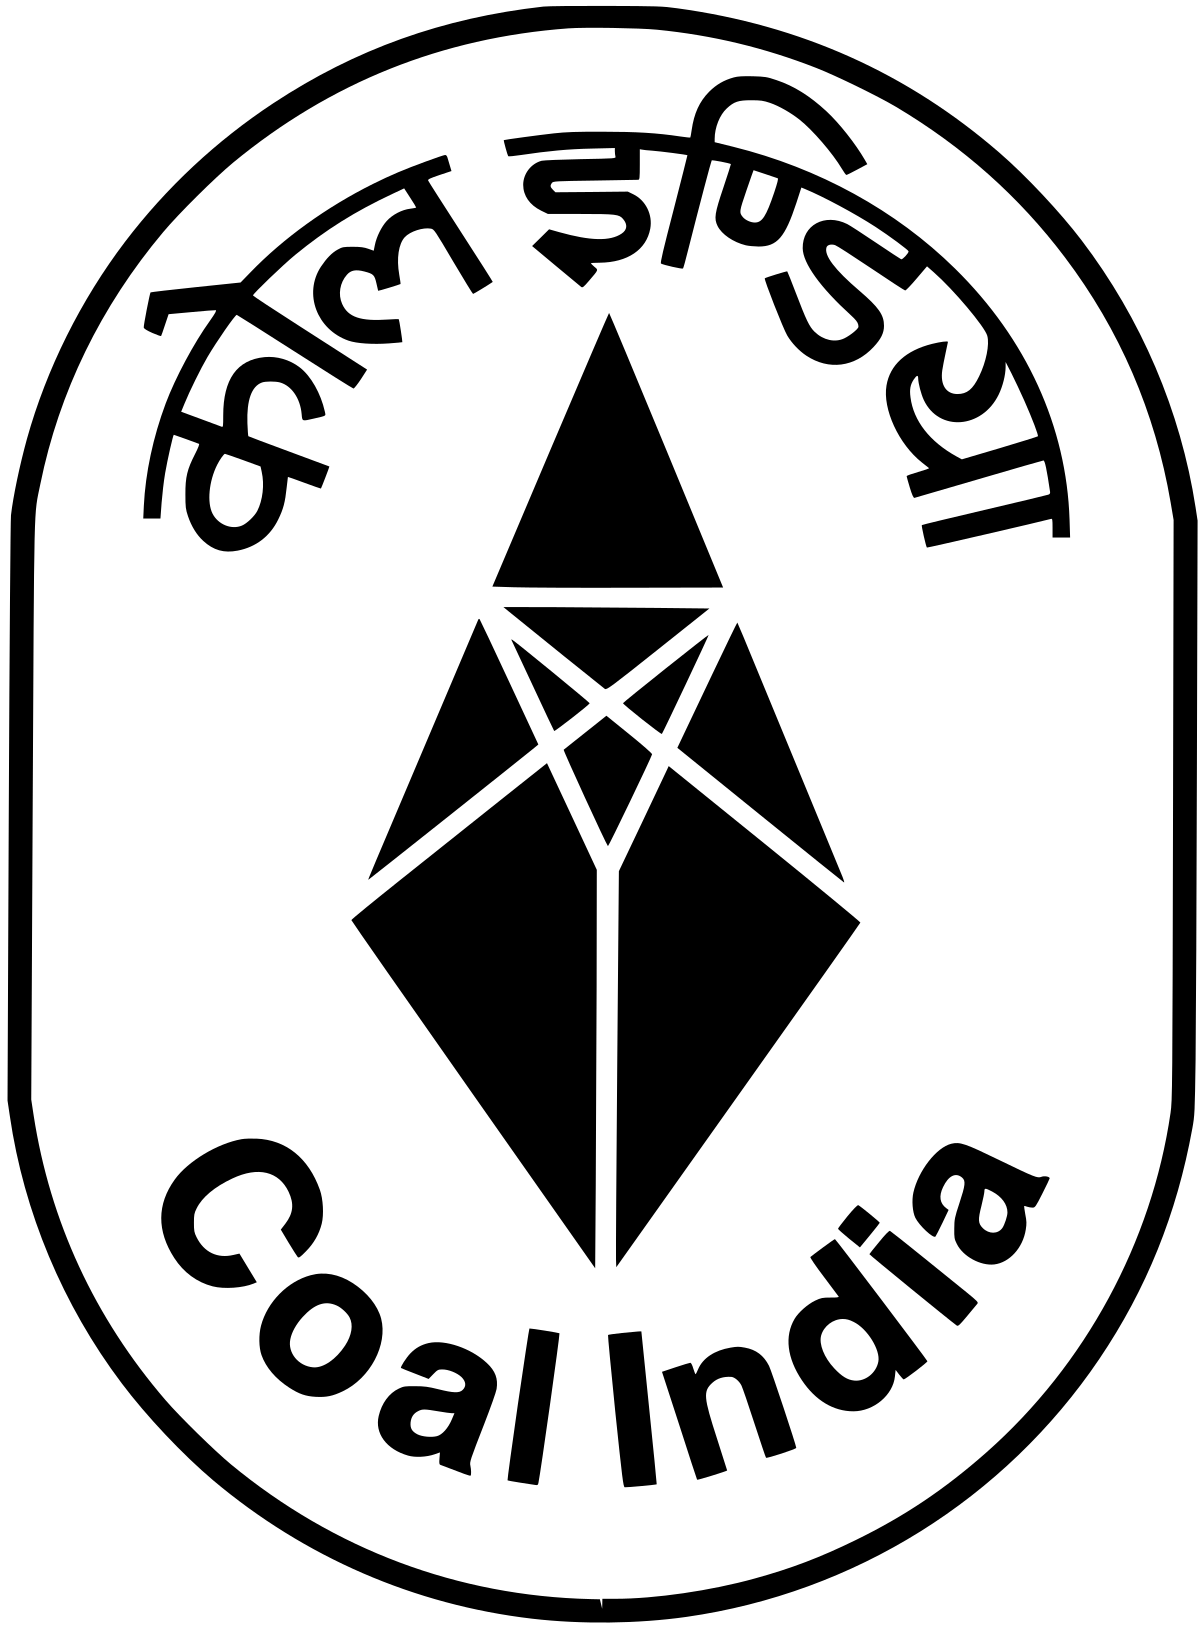 Coal_India_Logo.svg